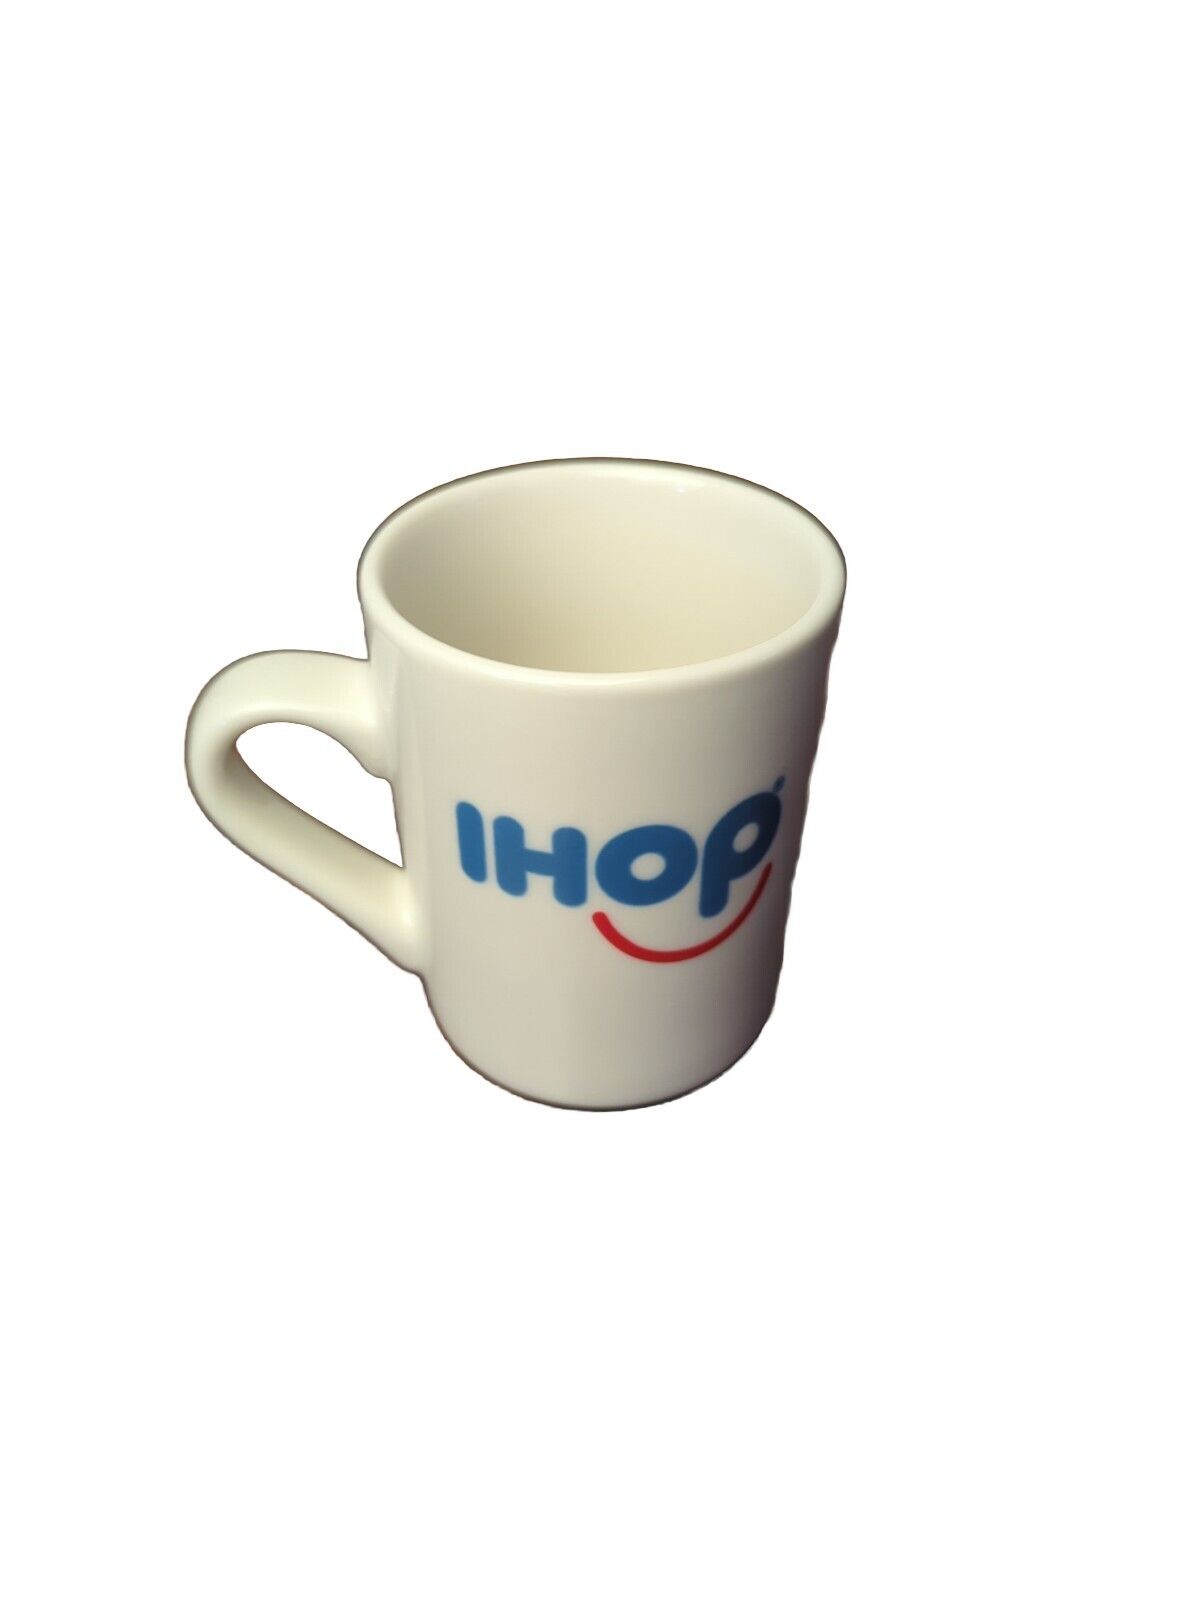 IHOP Restaurant Smiley Coffee Mug Ceramic Tuxton 8oz Excellent Buy 2+ And Save